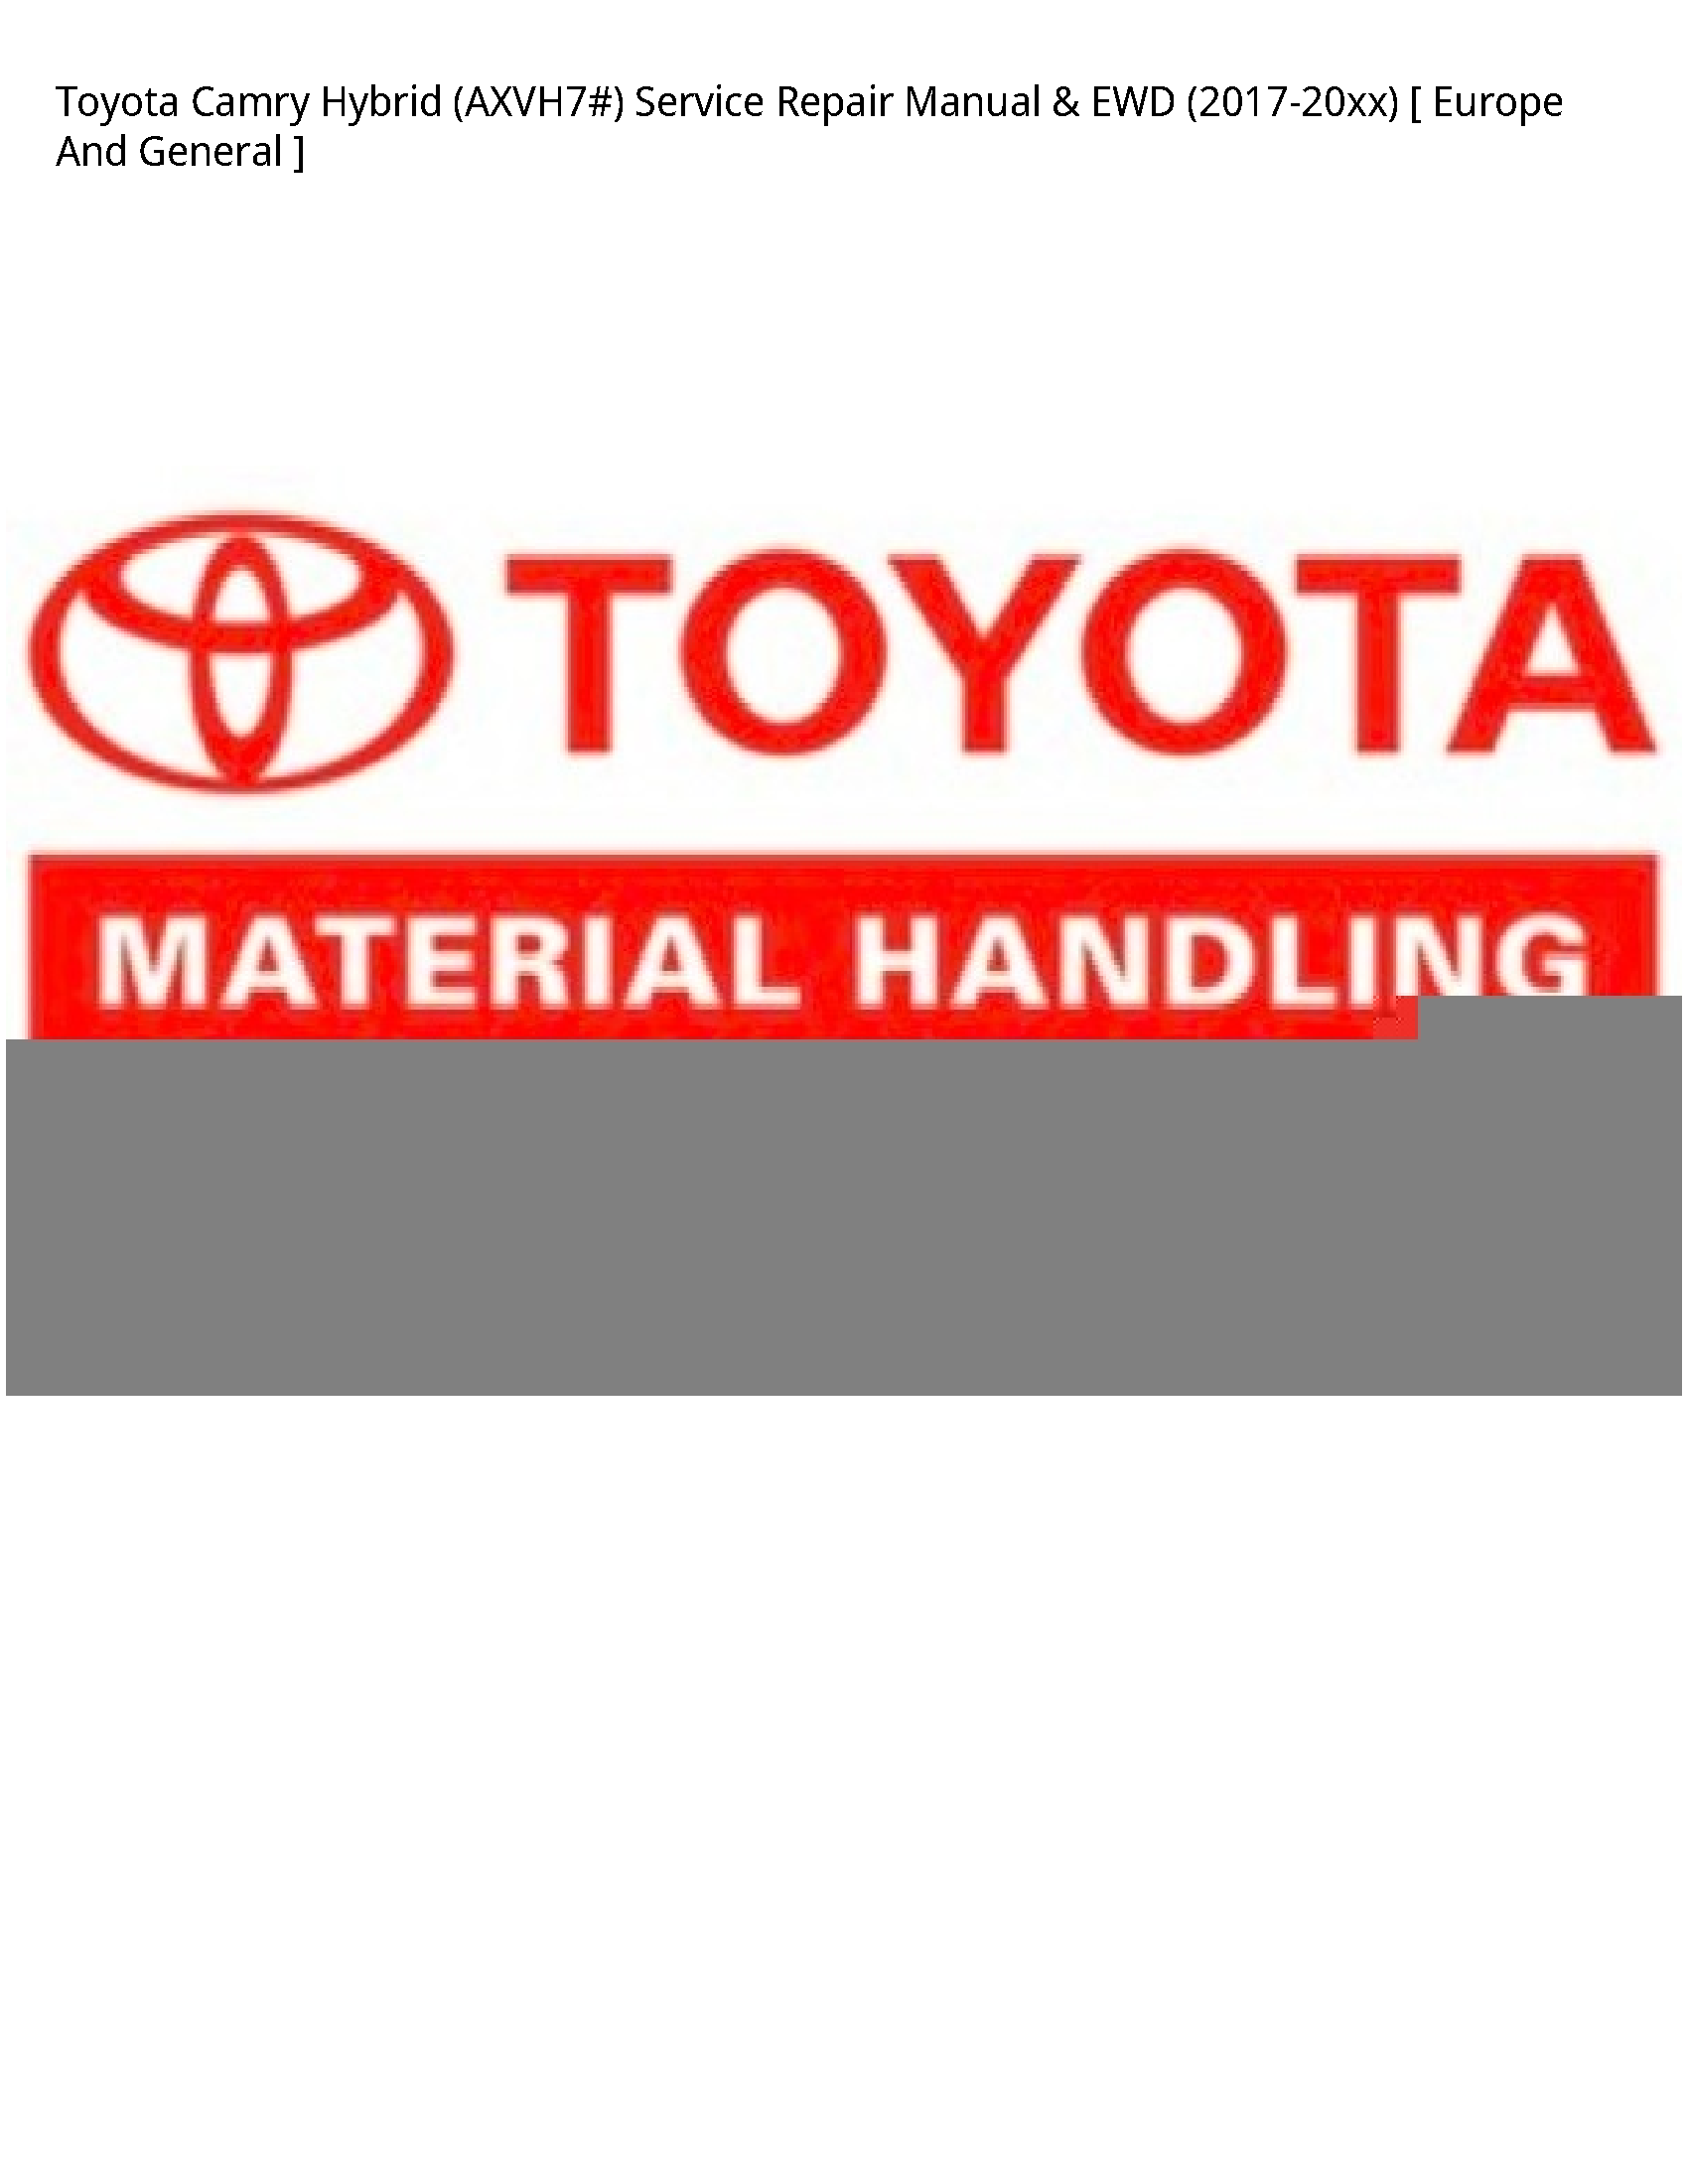 Toyota (AXVH7#) Camry Hybrid manual